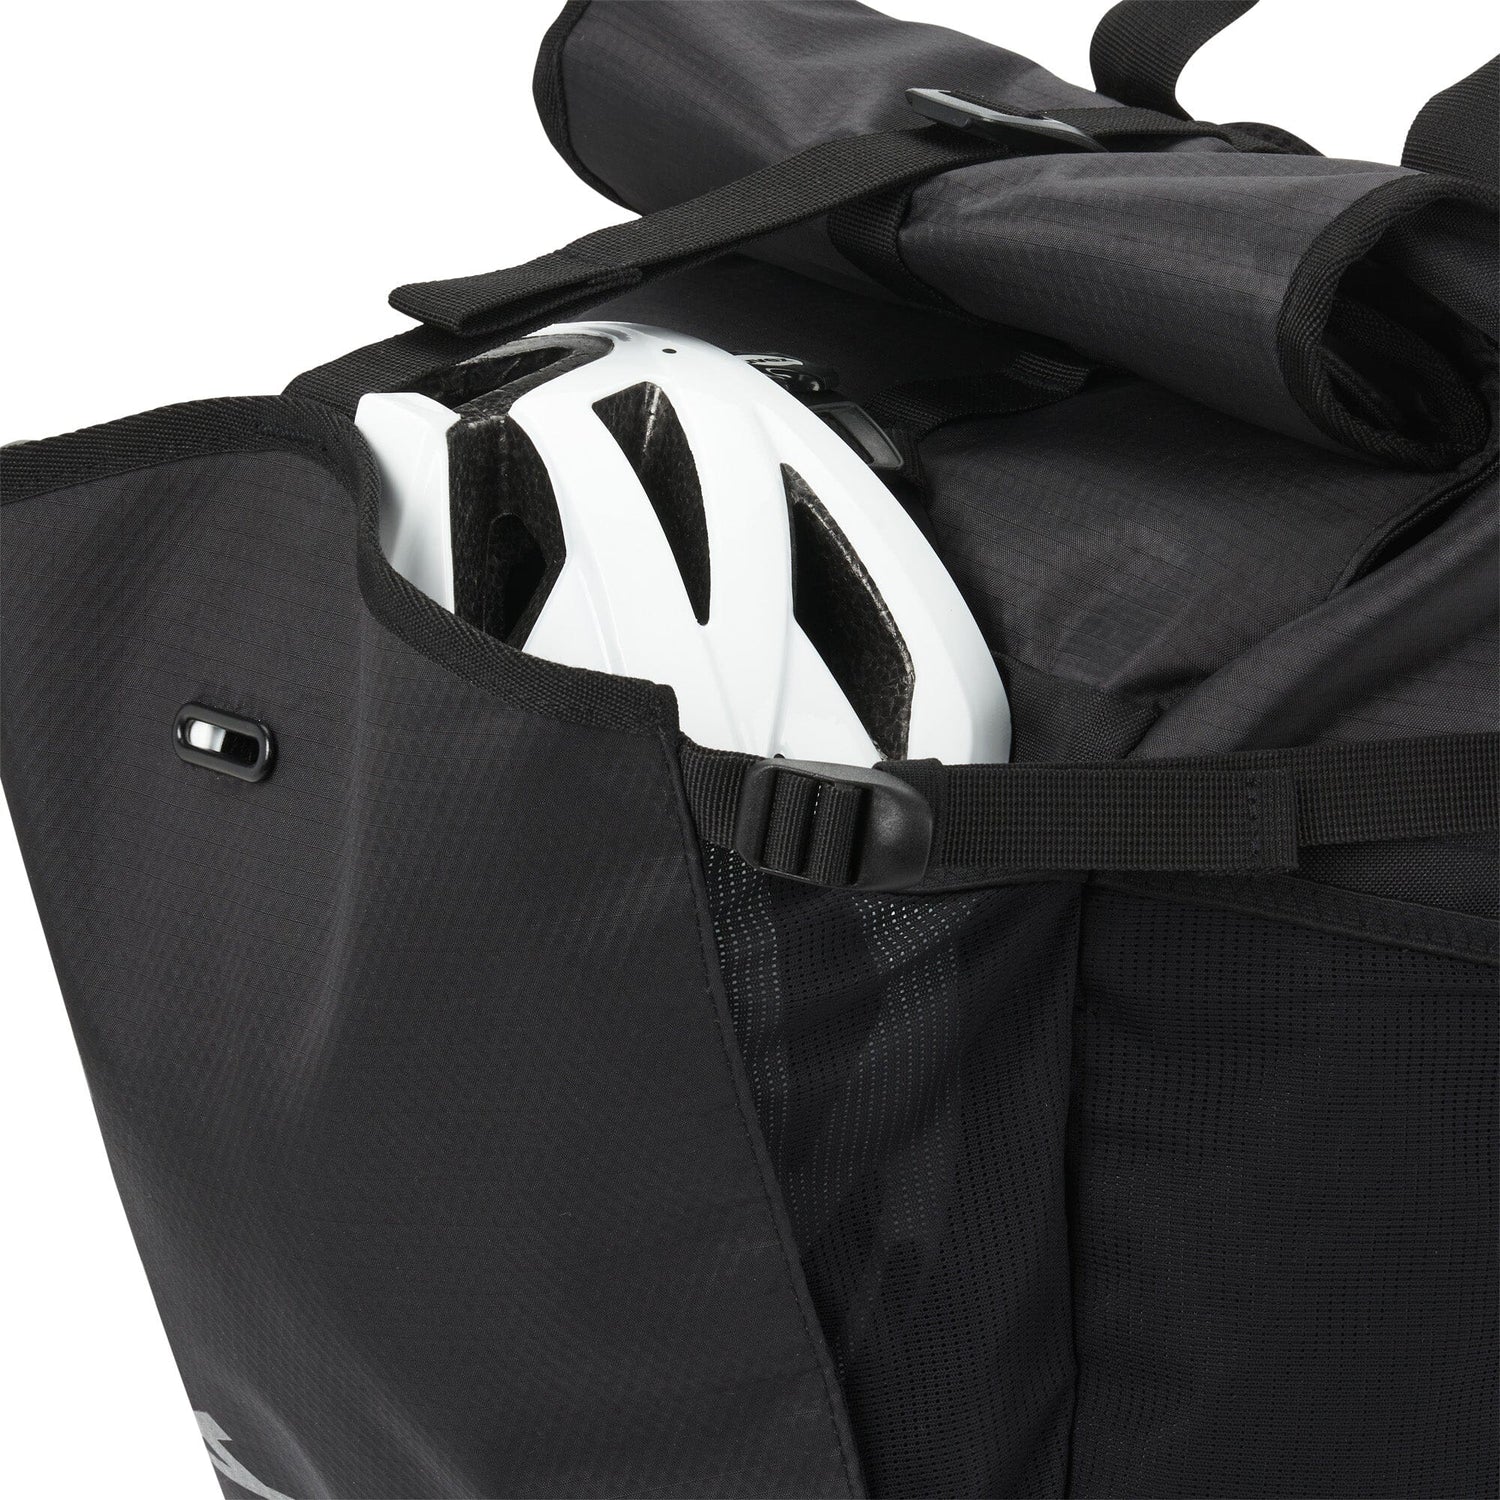 Aevor - Roll Pack Proof - 100% Recycled PET-bottles - Weekendbee - sustainable sportswear